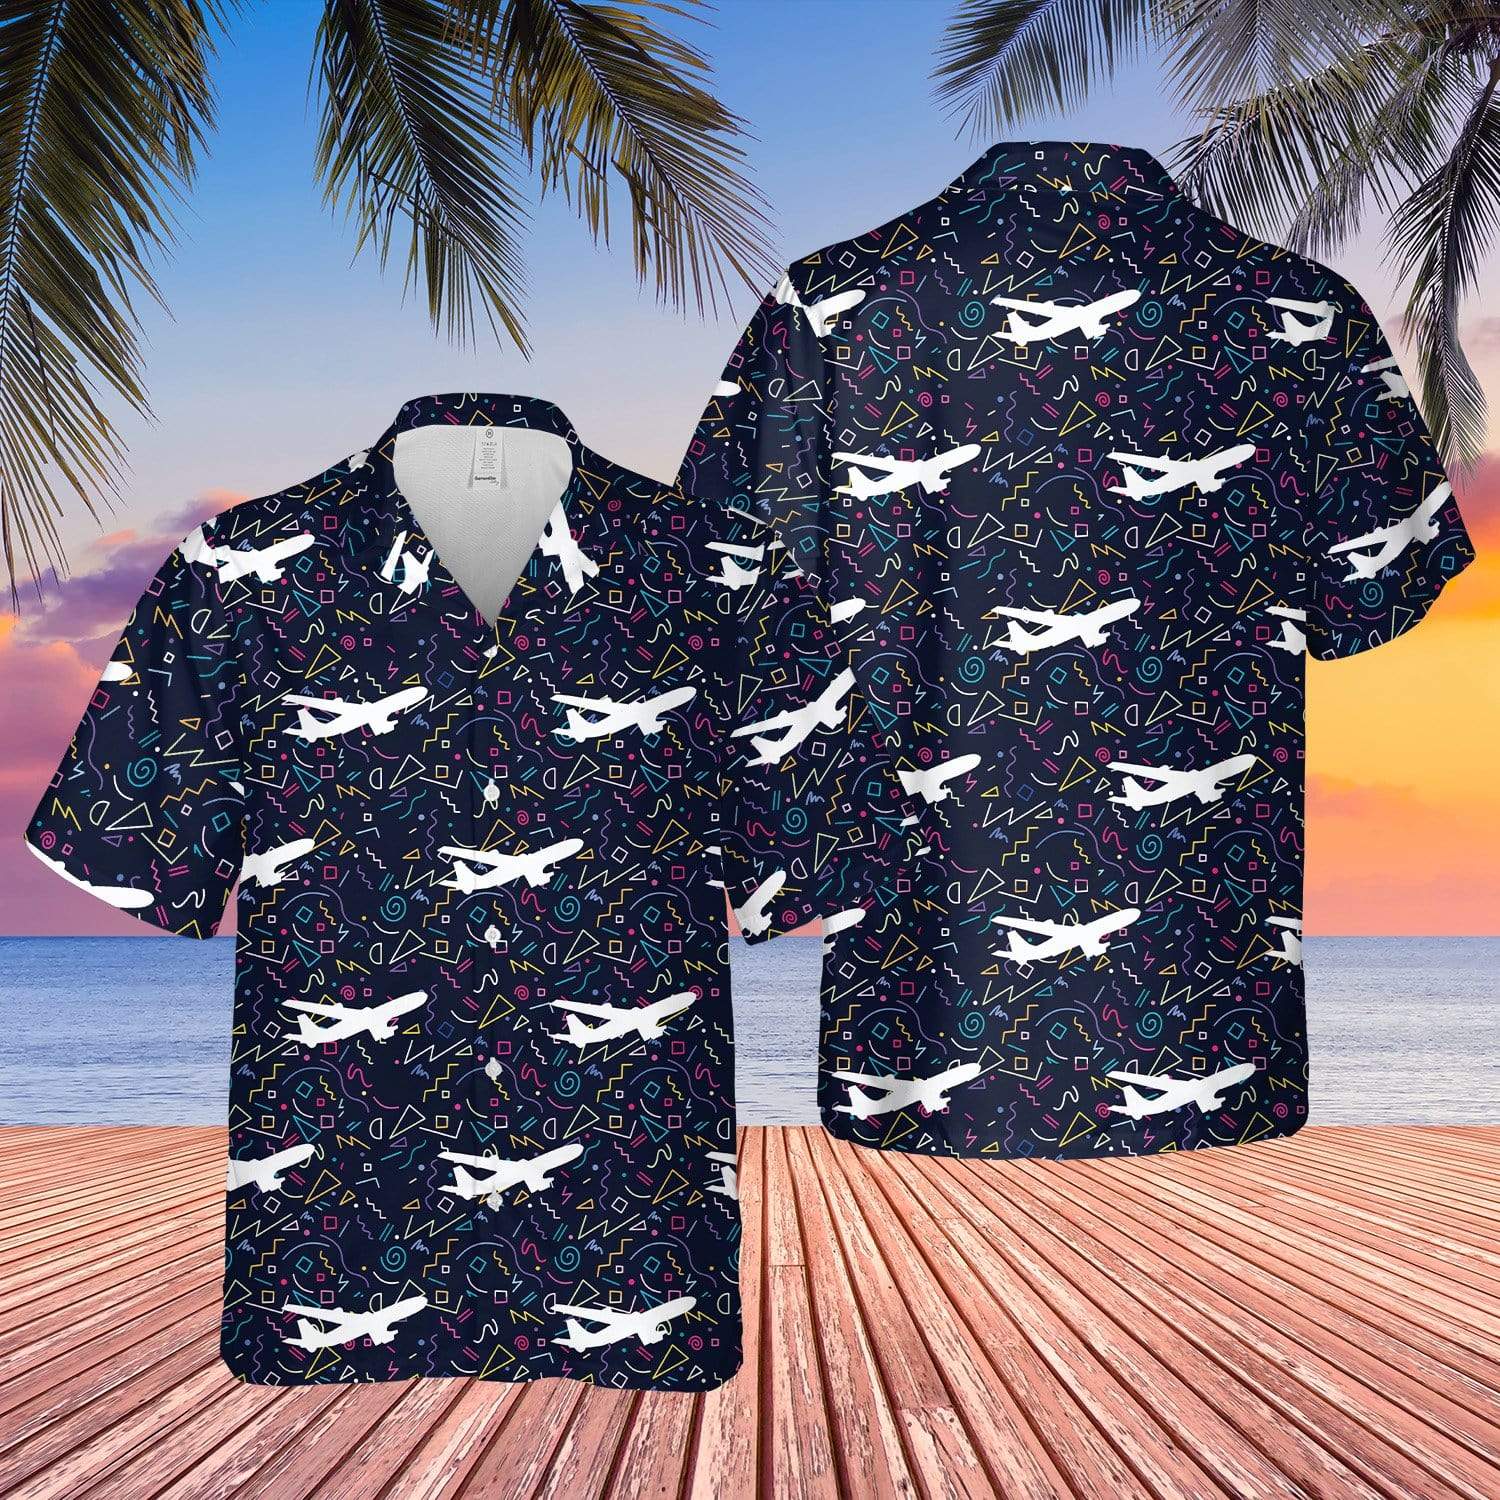 kurobase-amazing-airplane-hawaiian-aloha-shirts-14621v.jpg